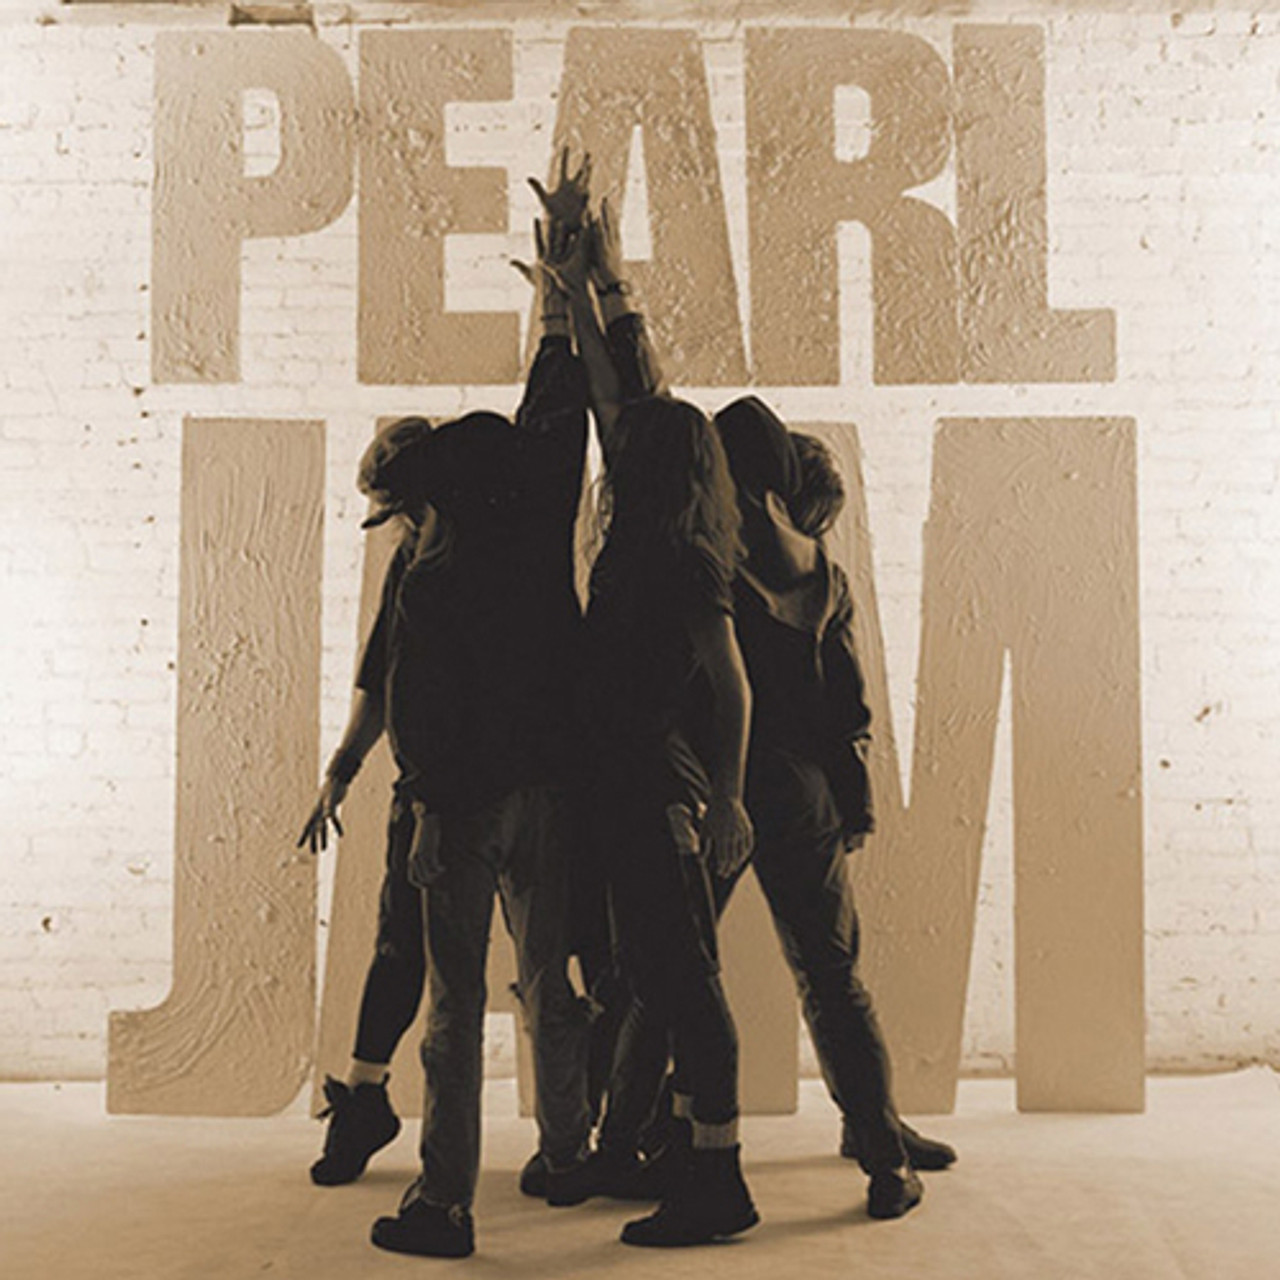 Pearl - Ten (Vinyl 2LP) * * * - Music Direct